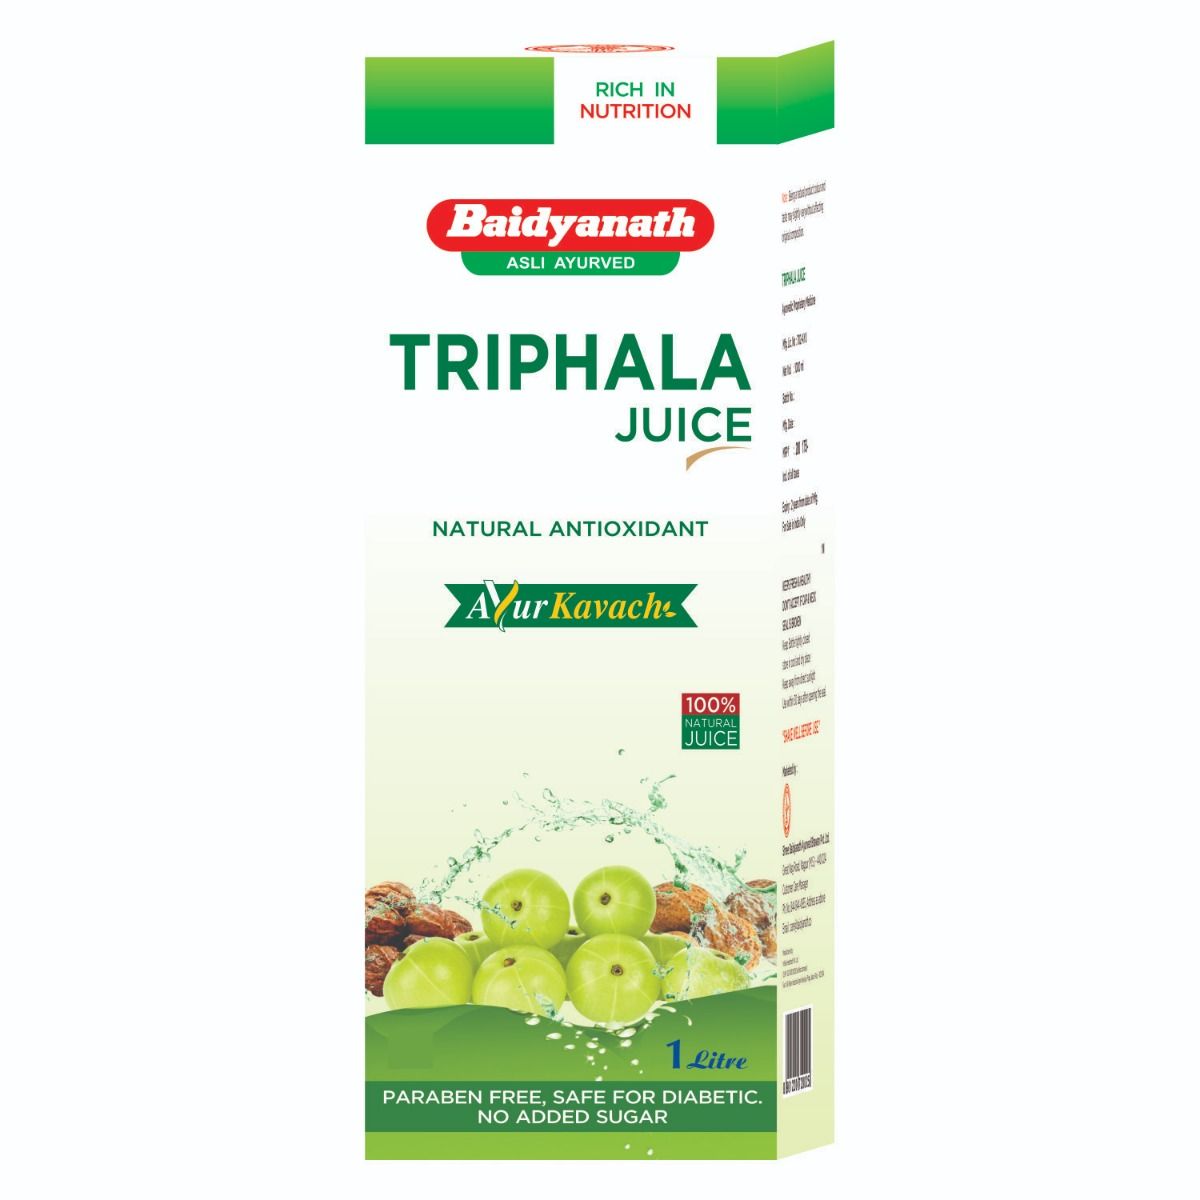 Buy Baidyanath (Nagpur) Triphala, Juice 1 Litre Online